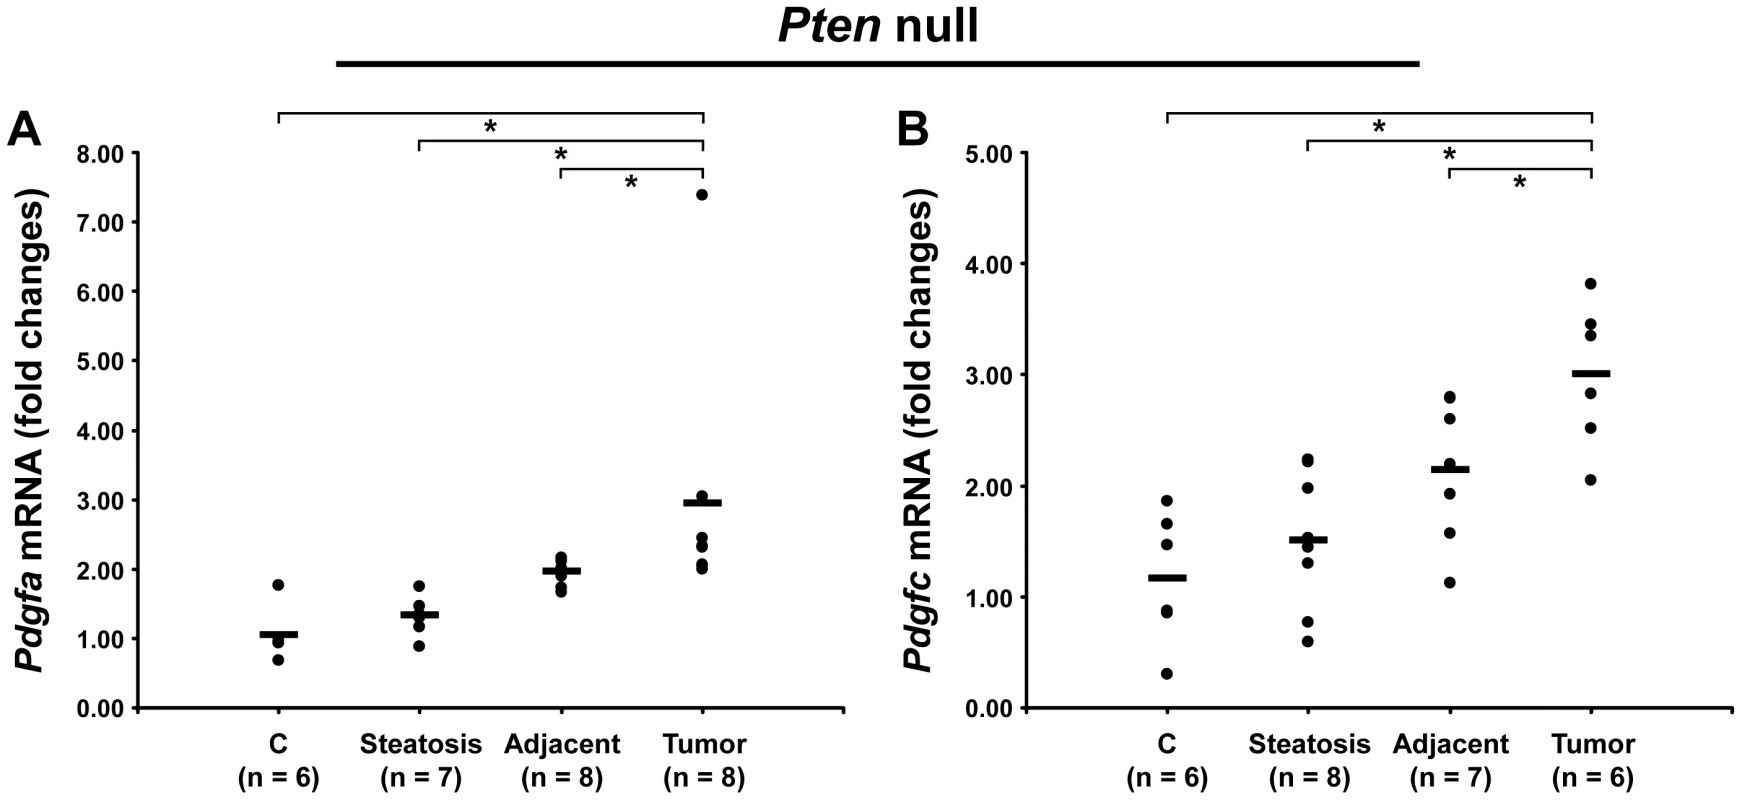 Up-regulation of <i>Pdgfa</i> and <i>Pdgfc</i> mRNAs in <i>Pten</i> null tumors.